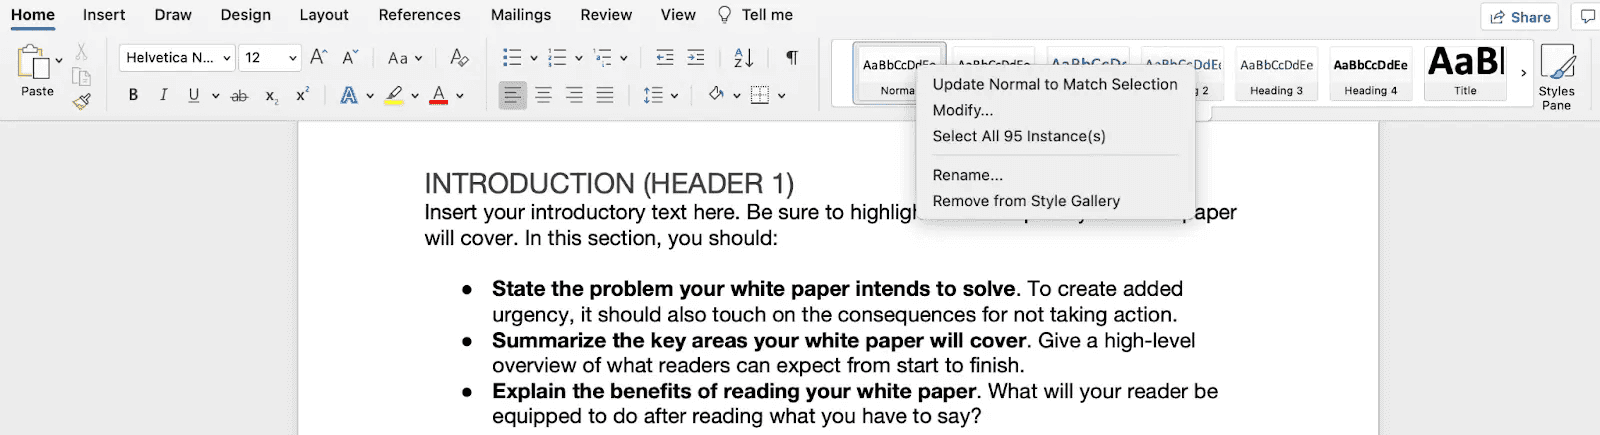 stylization of a white paper doc